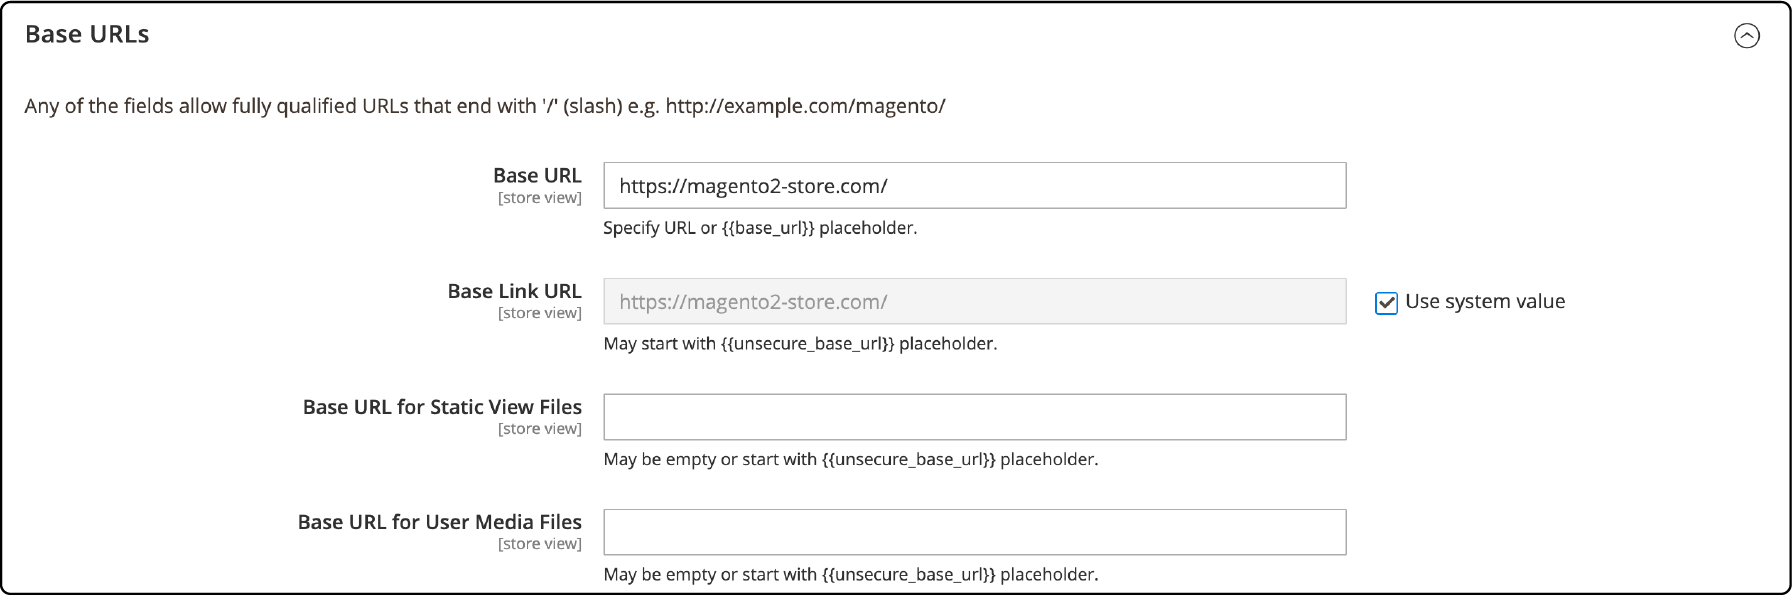 Configuring base URL for Magento storefront